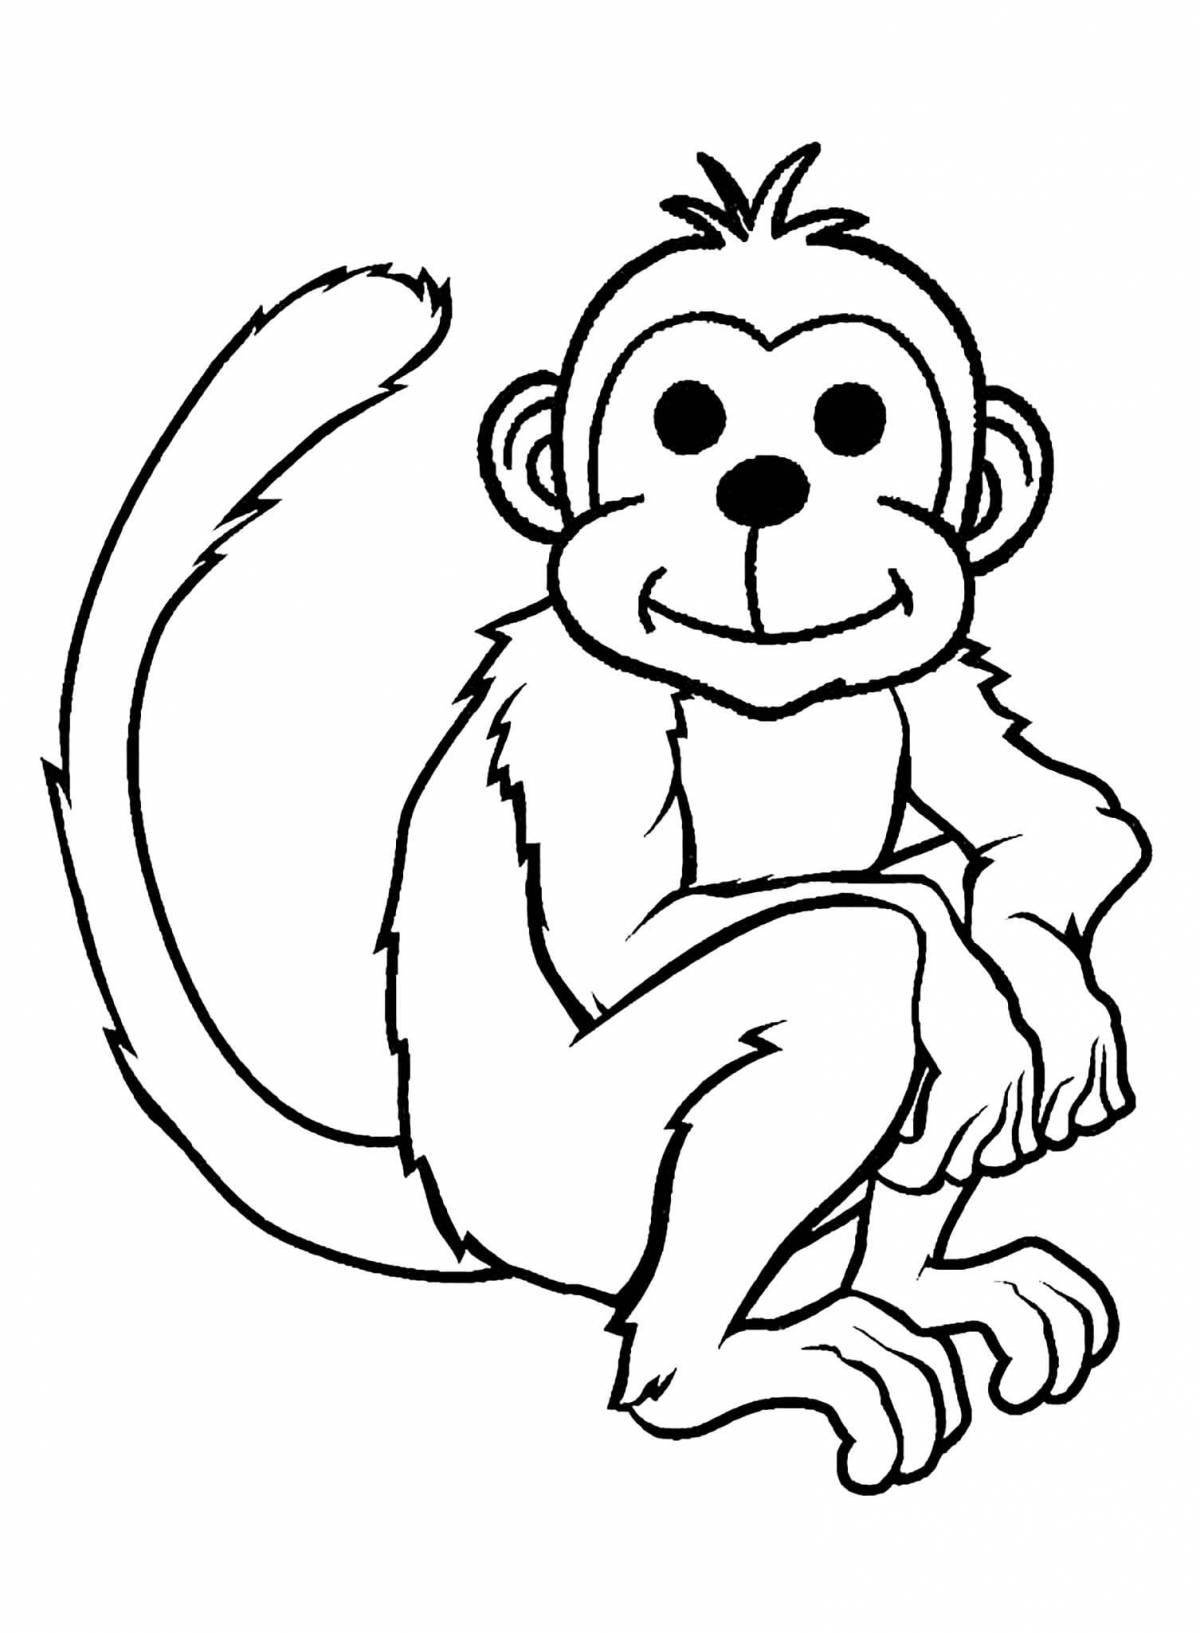 Joyful monkey coloring for kids